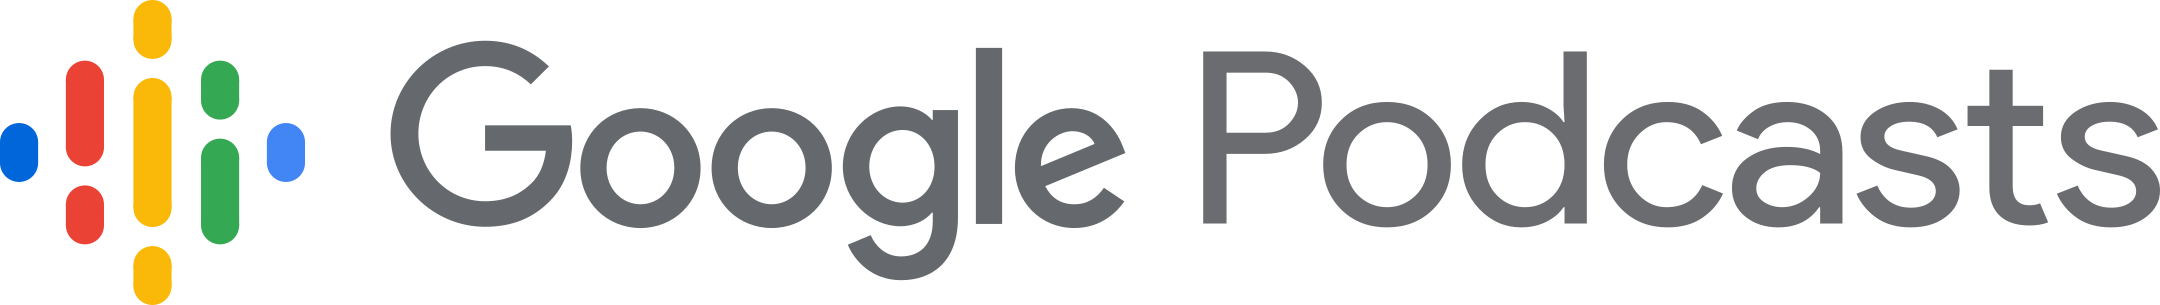 google-podcasts-logo-1.png